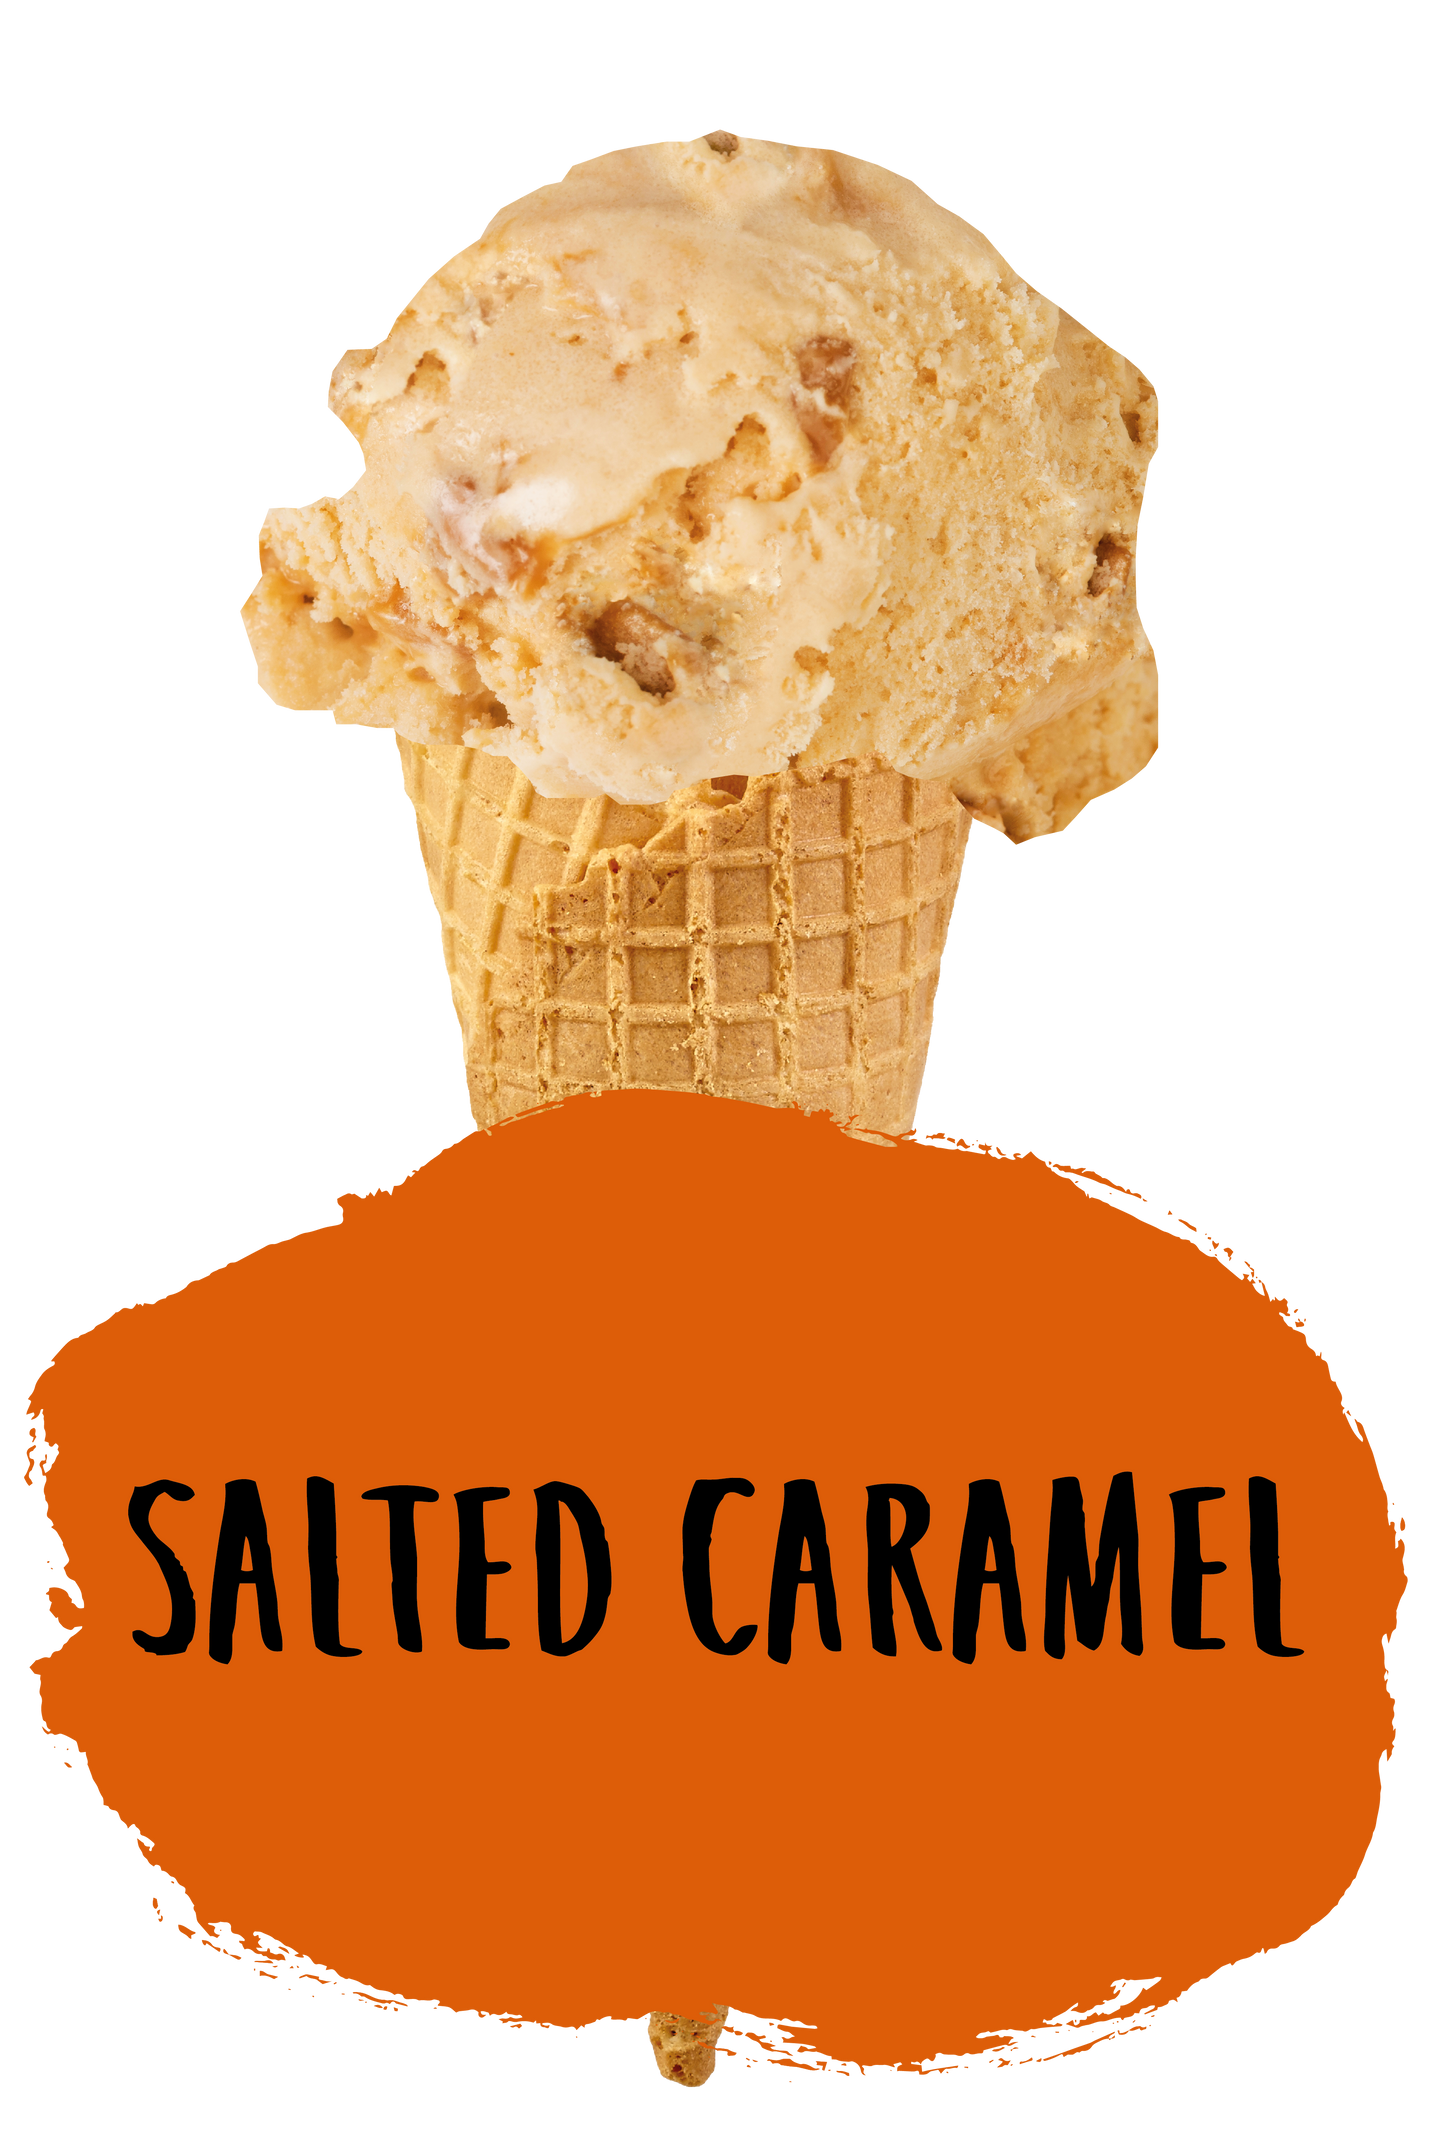 Marshfield Farm Salted Caramel Ice Cream Flavour Cone